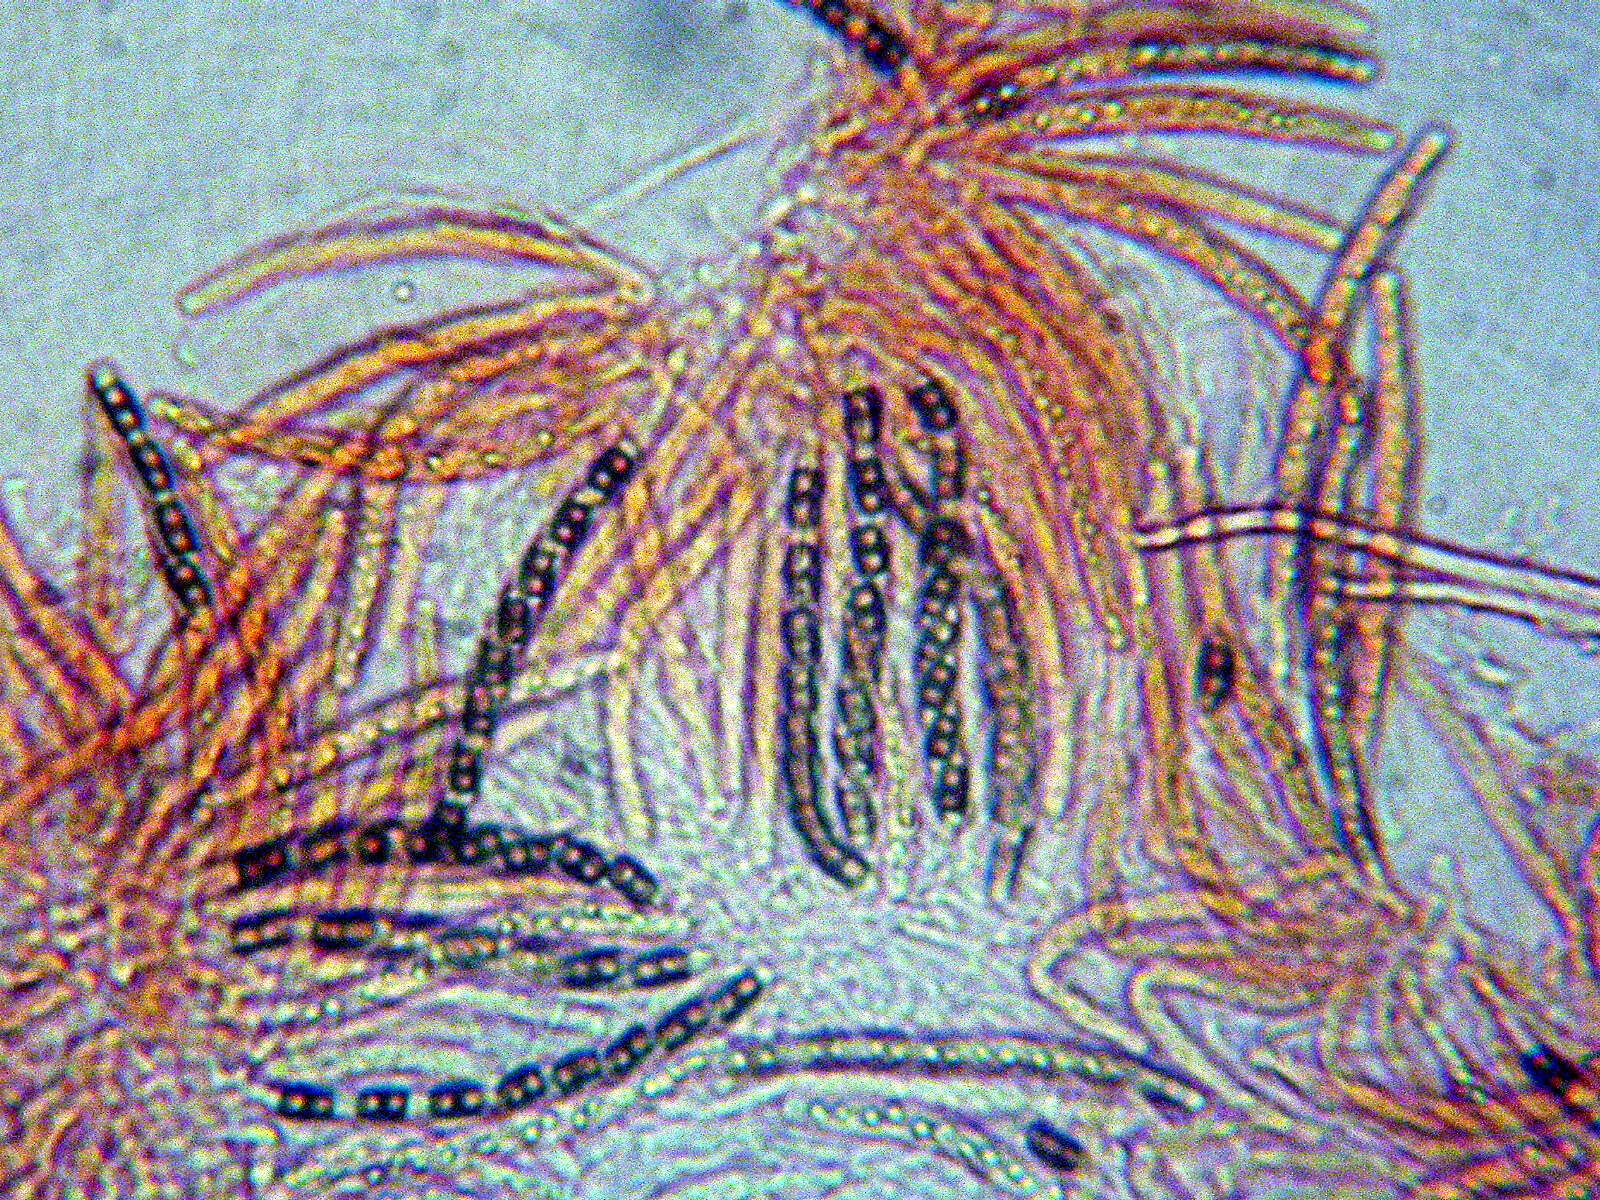 Image of unclassified Sordariomycetes